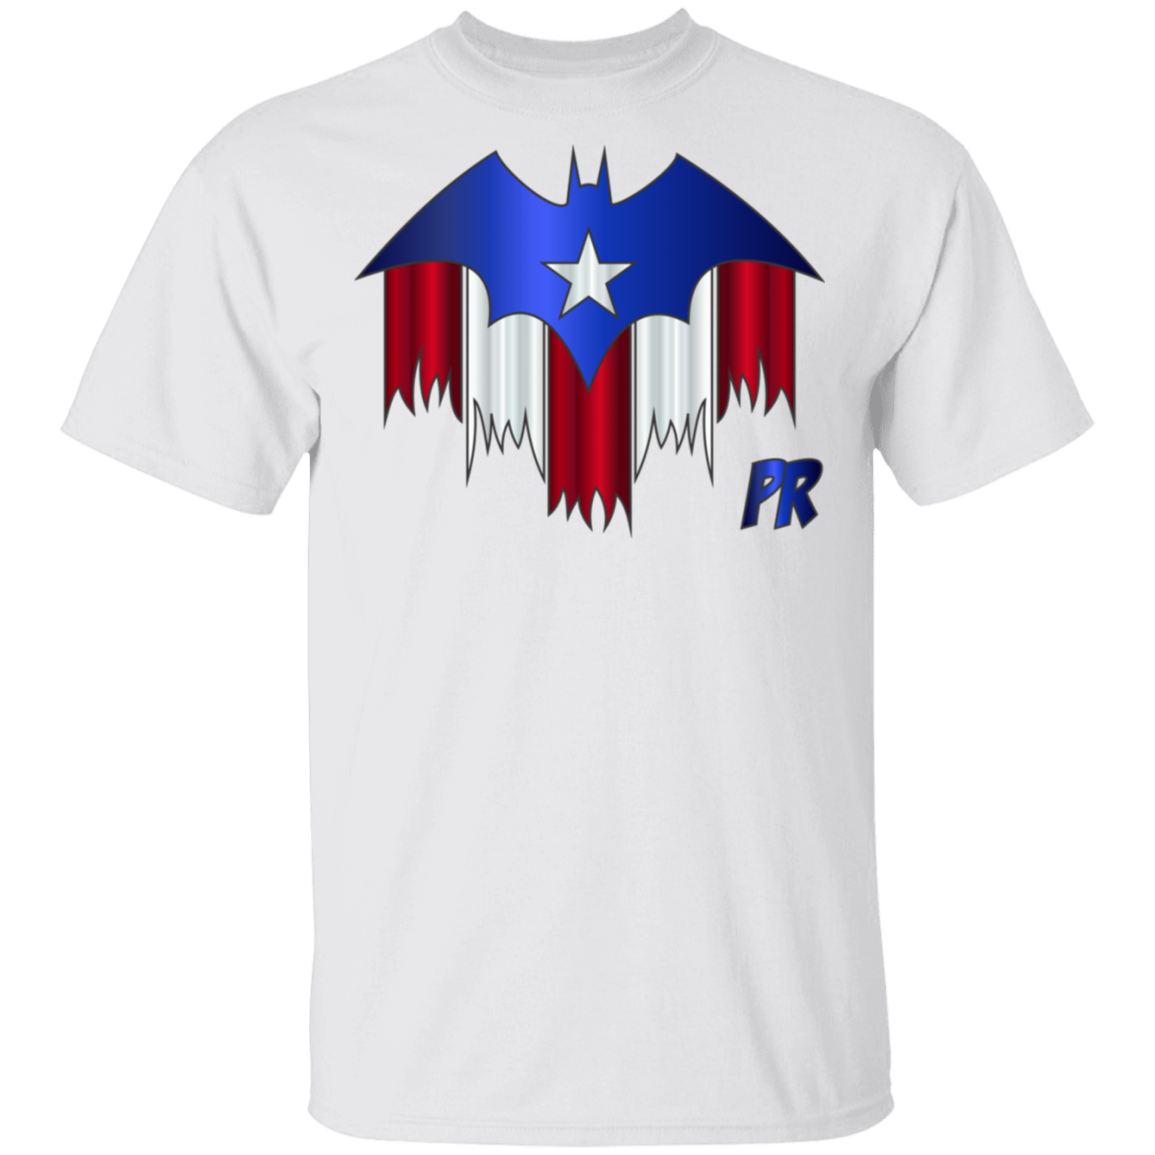 PR BATMAN 5.3 oz. T-Shirt - Puerto Rican Pride